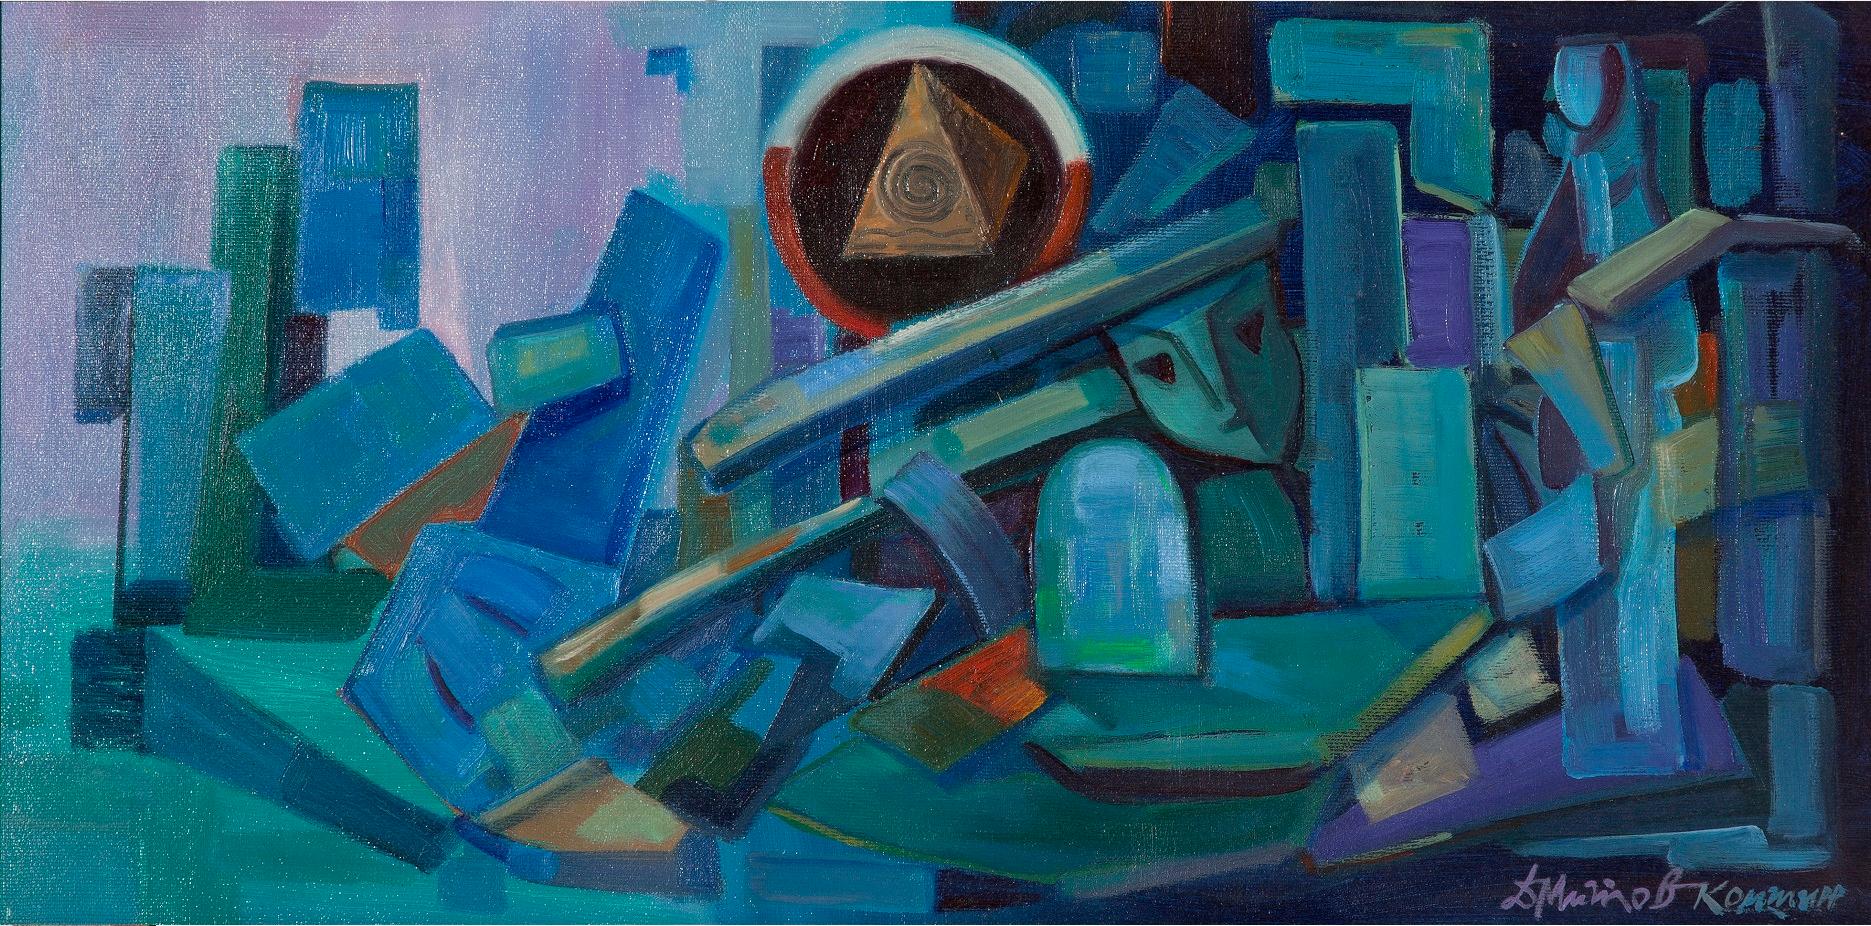 Dimitar Mitov - Komshin  Abstract Painting - Cultural Layers - Abstract Oil Painting Blue Green Brown 